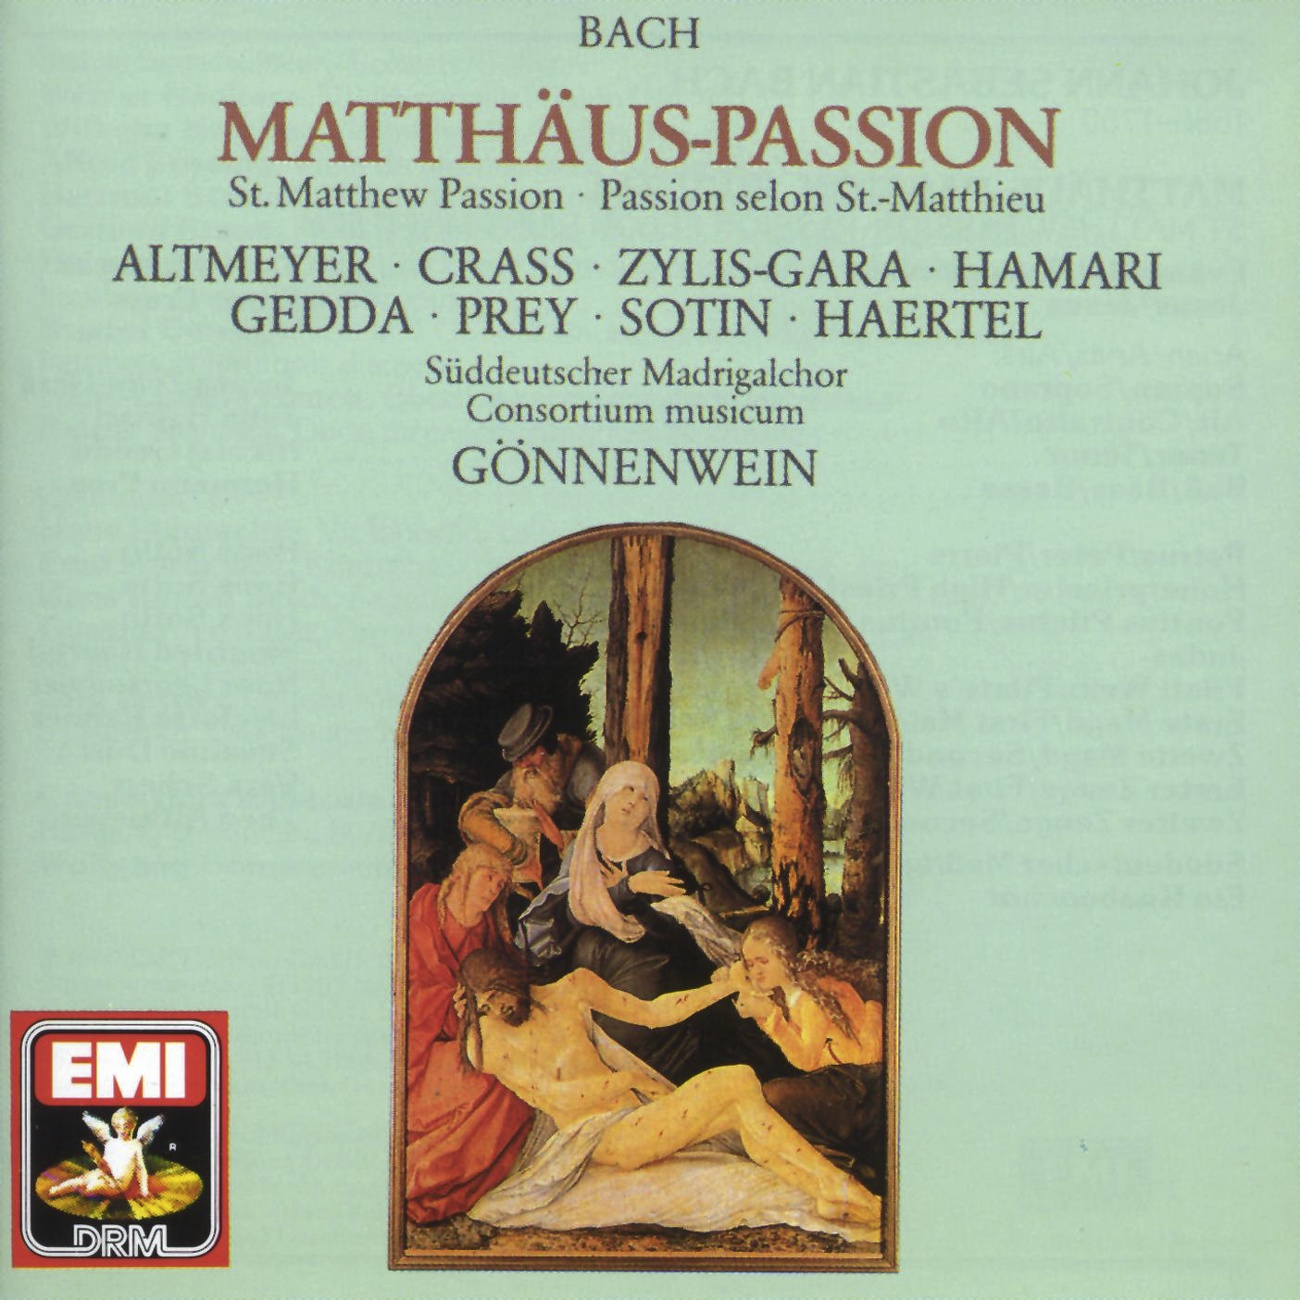 Matth usPassion BWV 244  Oratorium in 2 Teilen 1989 Digital Remaster, 2. Teil: Nr. 69  Rezitativ: Ach, Golgatha, Unsel' Ges Gol